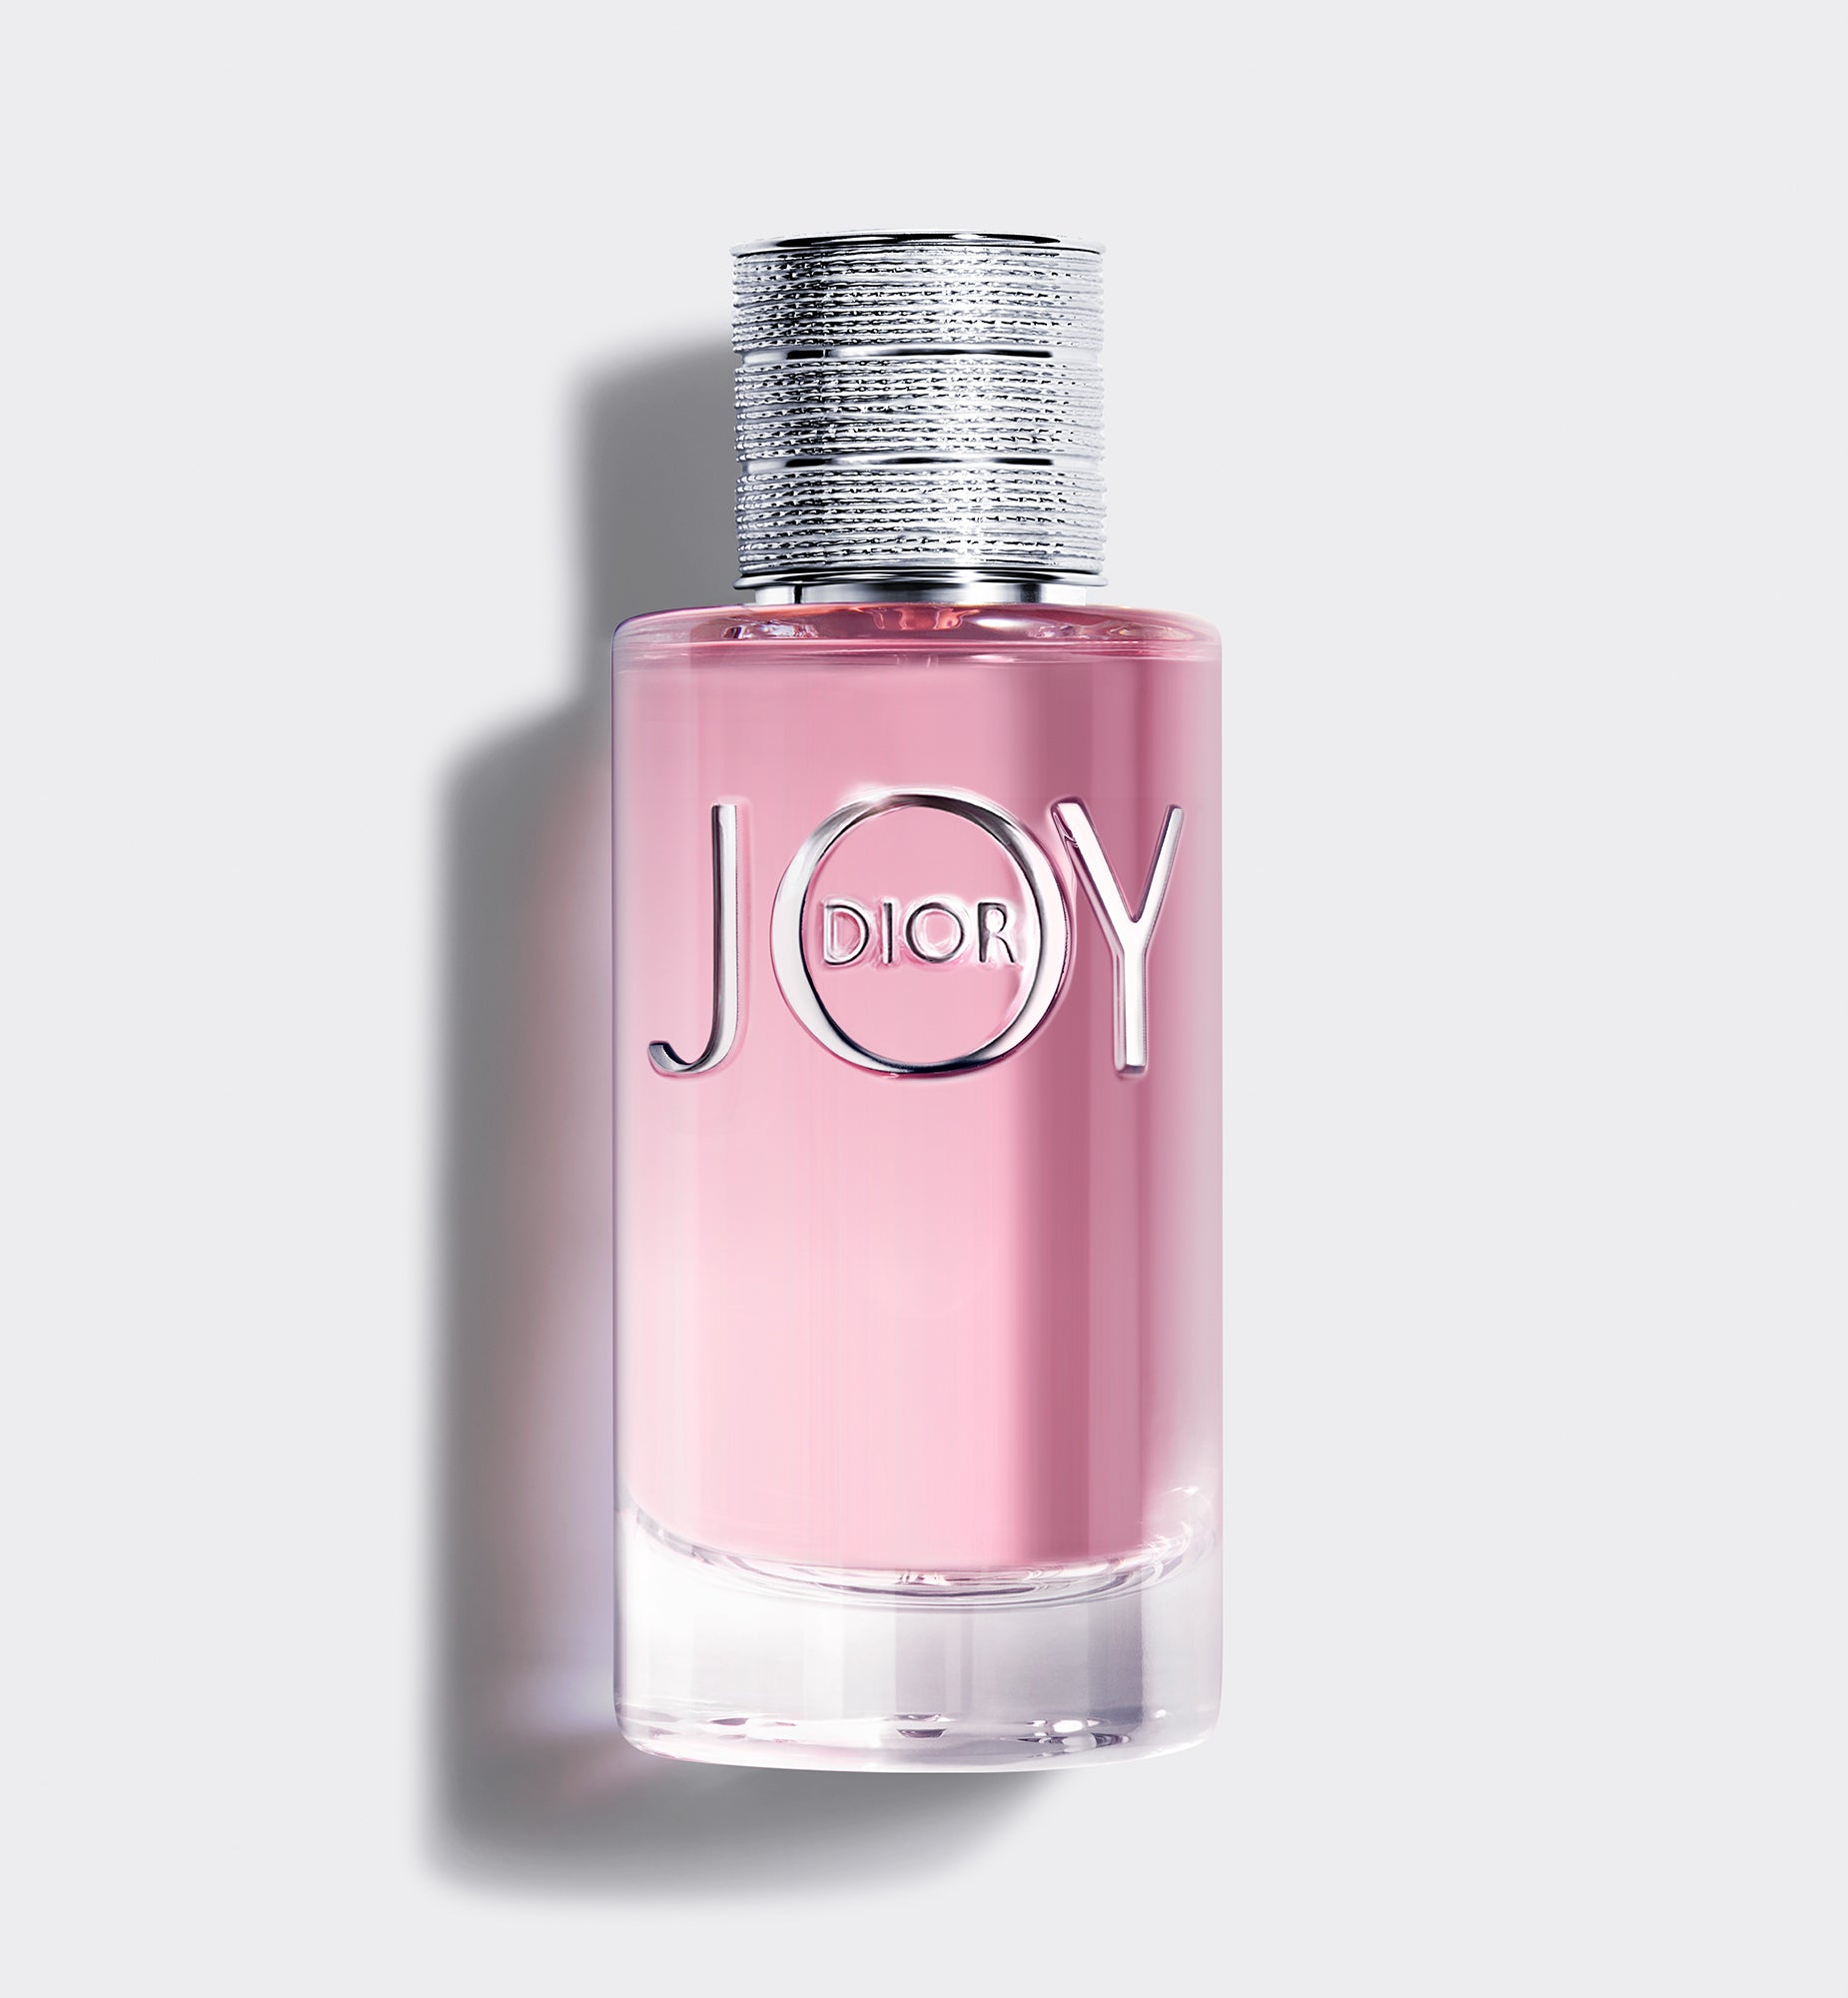 dior perfume joy price